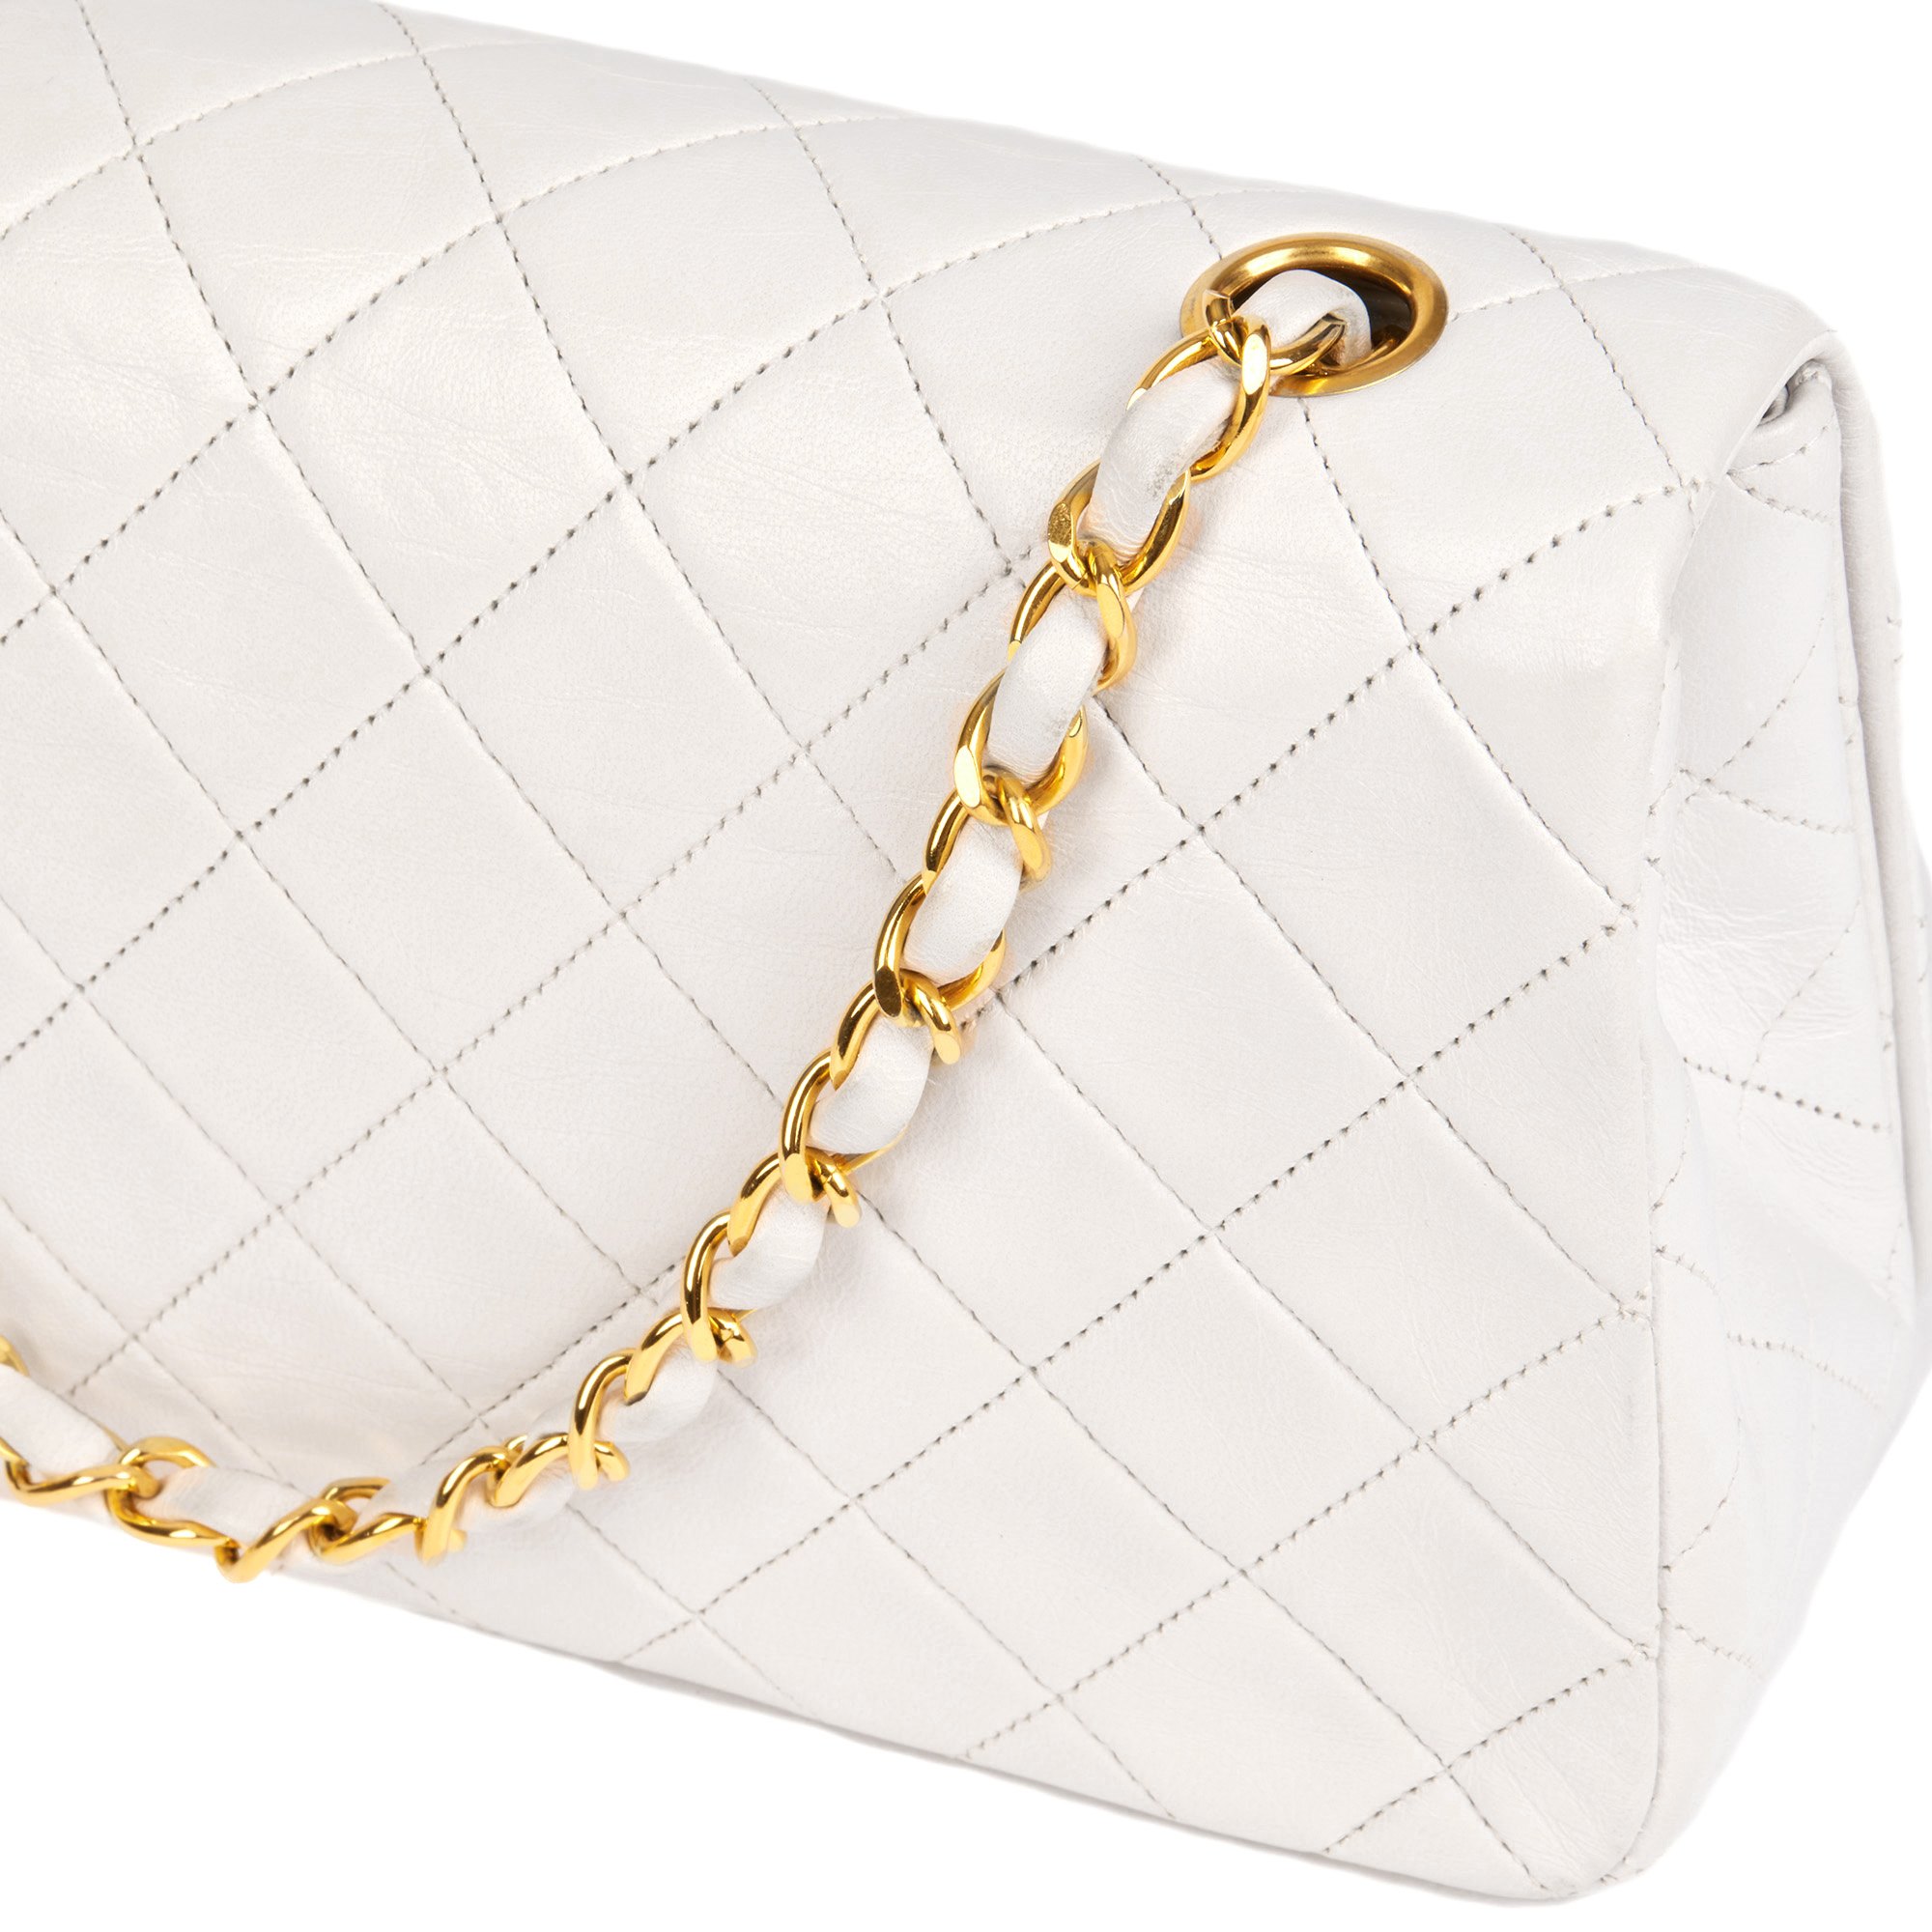 Chanel Small Classic Single Full Flap Bag 1990 HB4278 | Second Hand Handbags